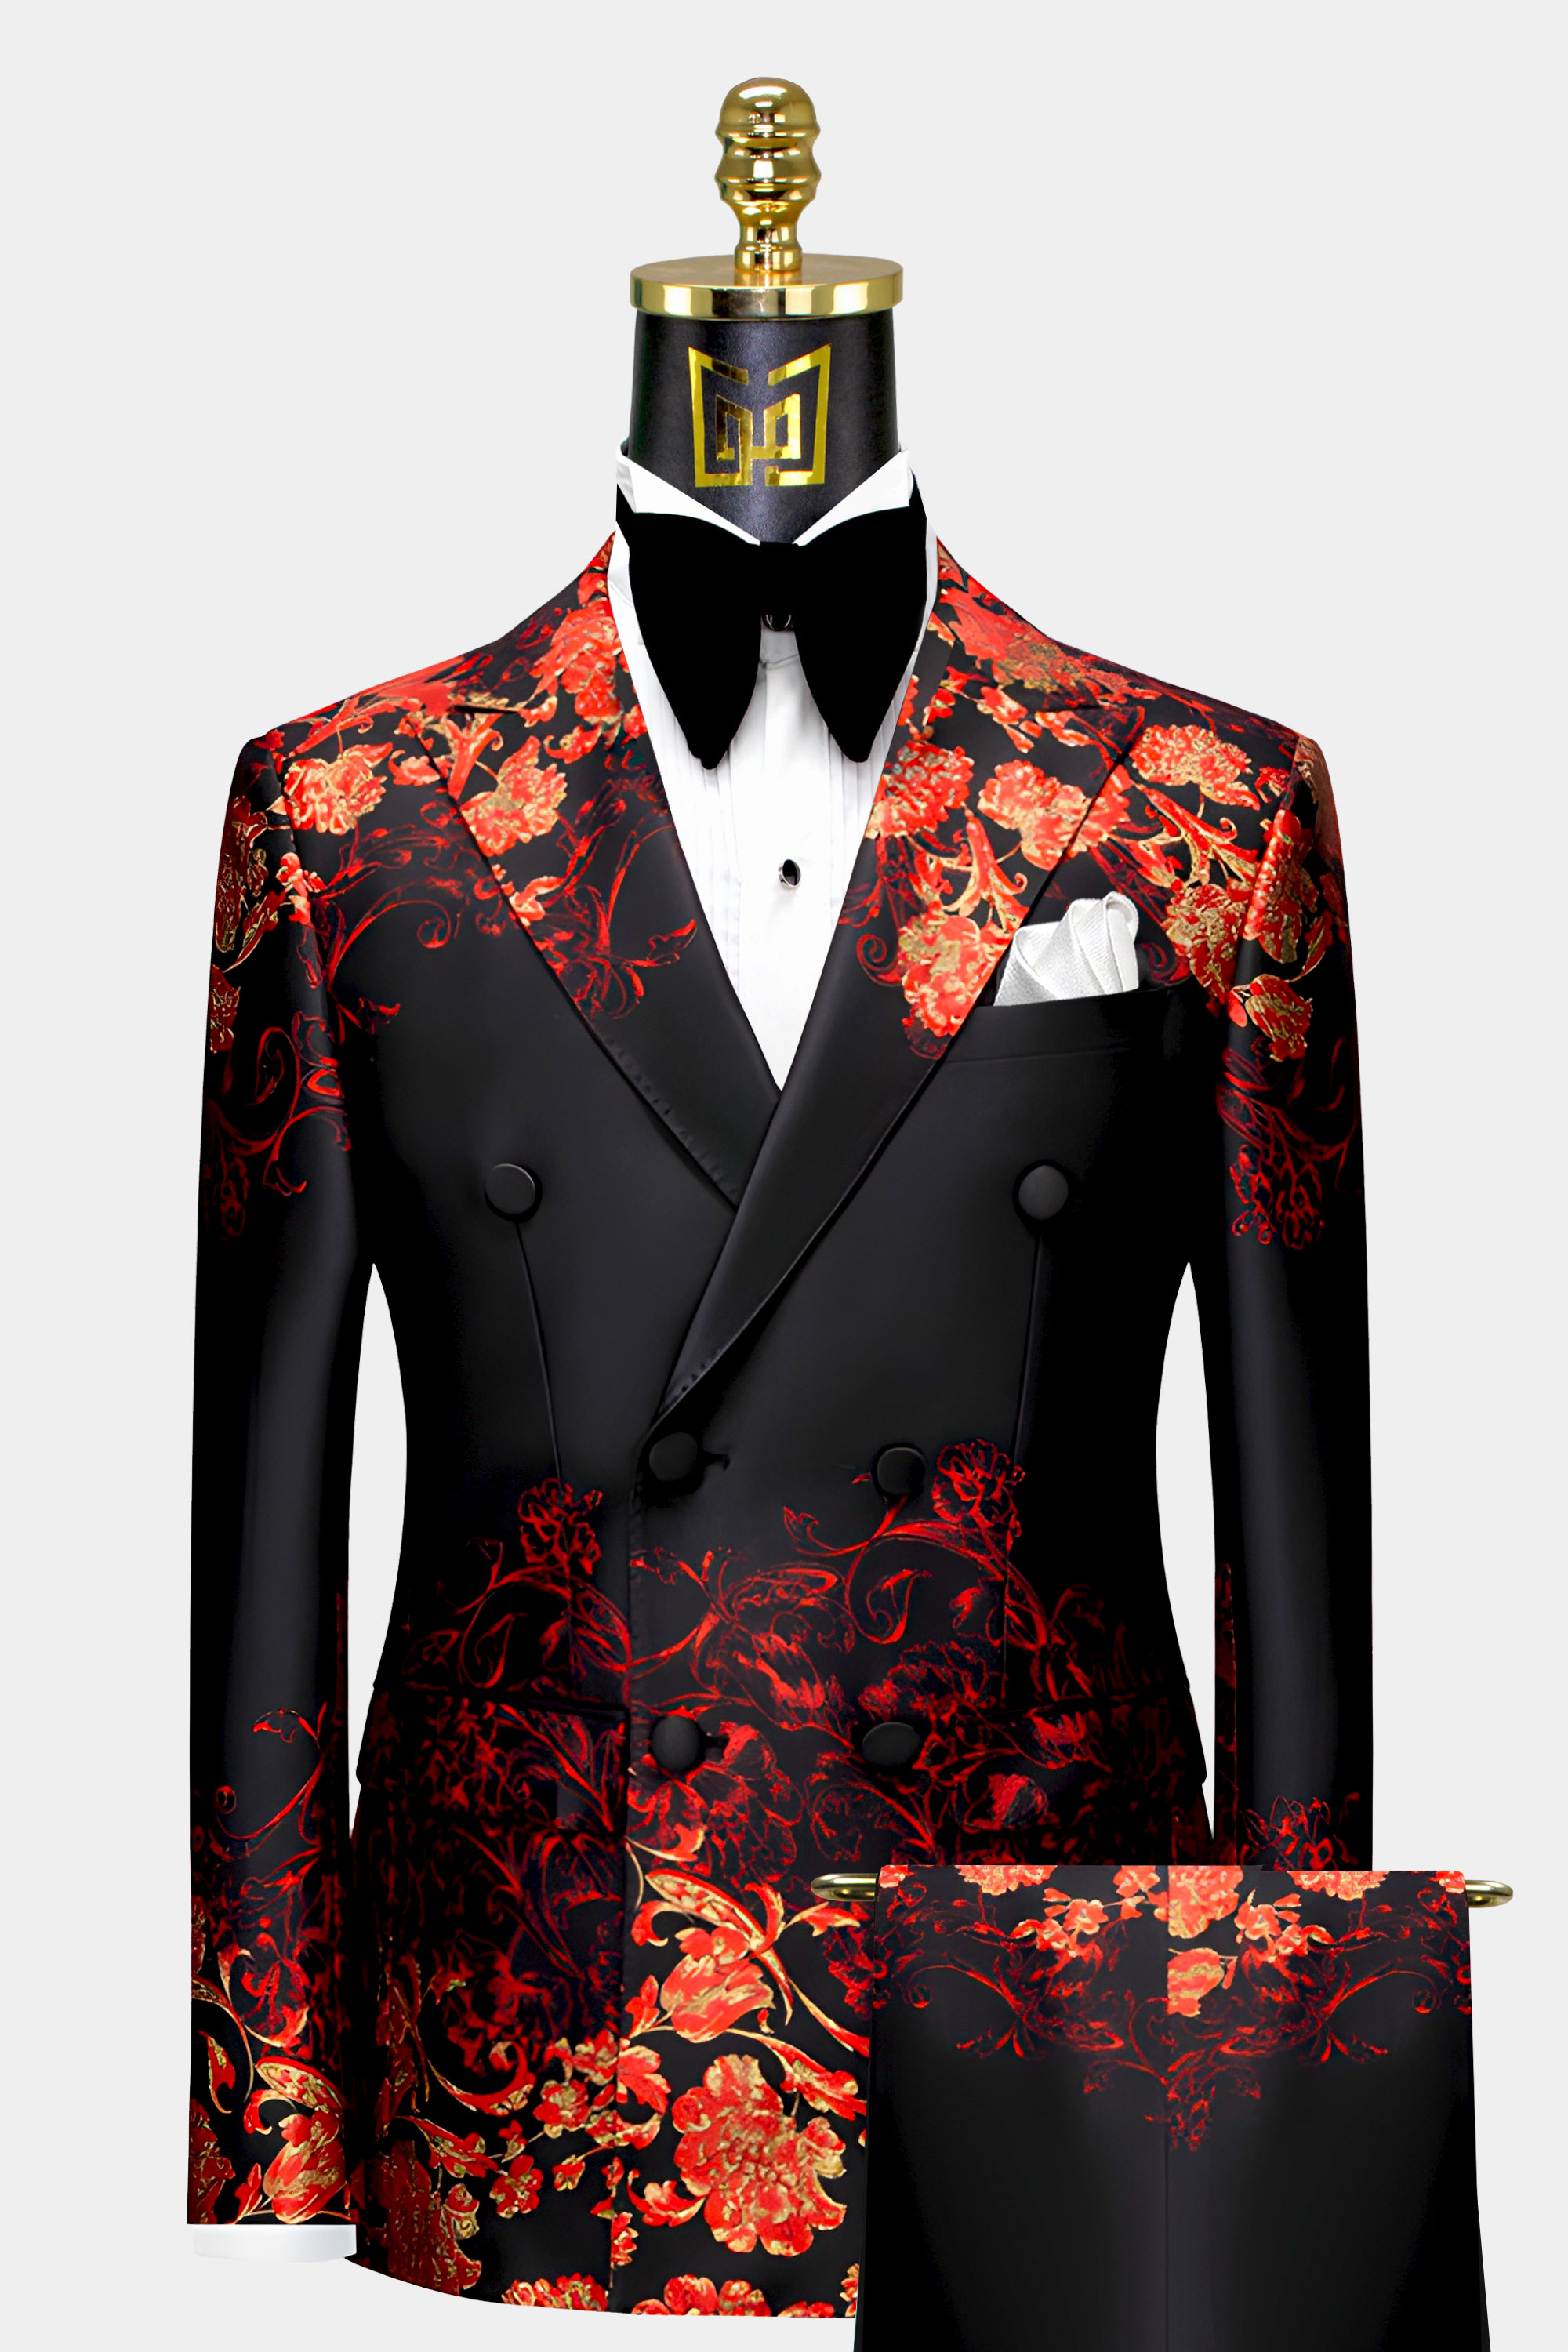 Mens-Red-Black-and-Gold-Tuxedo-Groom-Wedding-Prom-Suit-from-Gentlemansguru.com